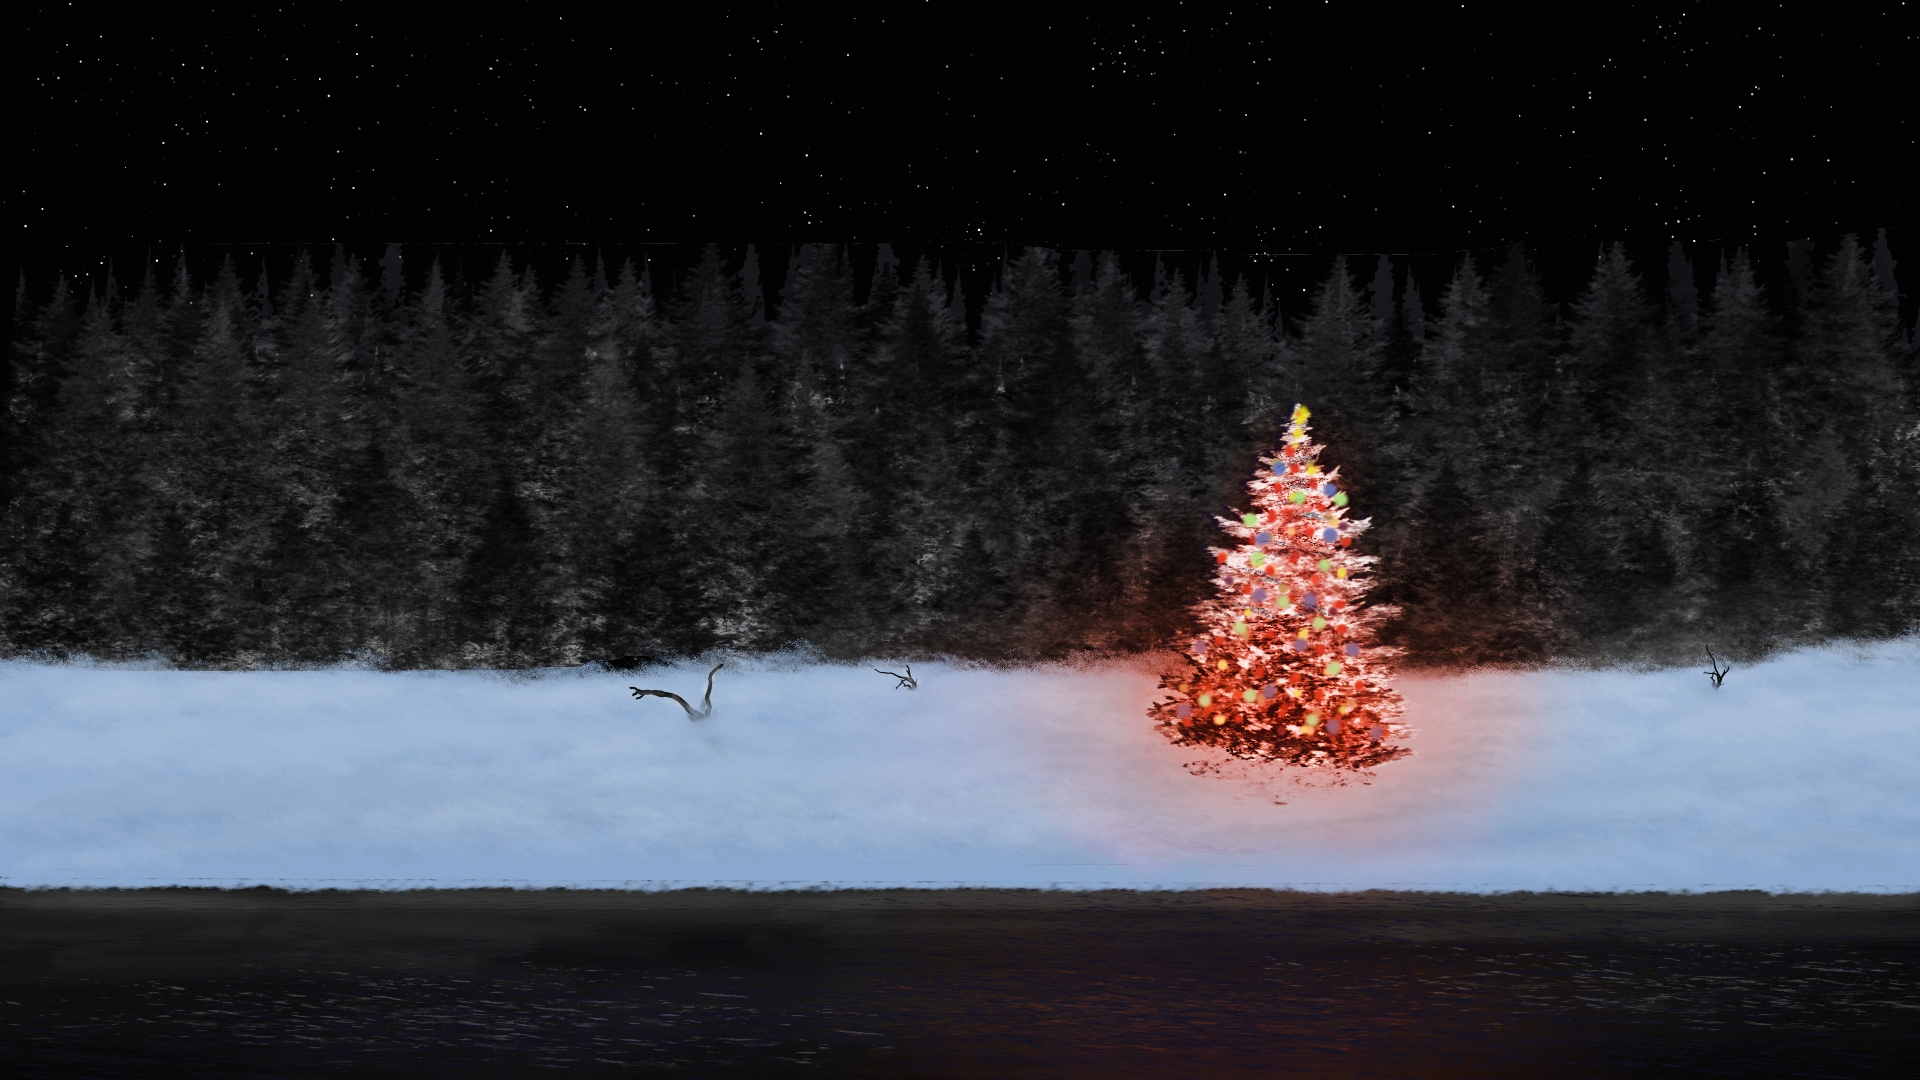 General 1920x1080 digital art digital painting nature Christmas Christmas tree holiday winter snow trees